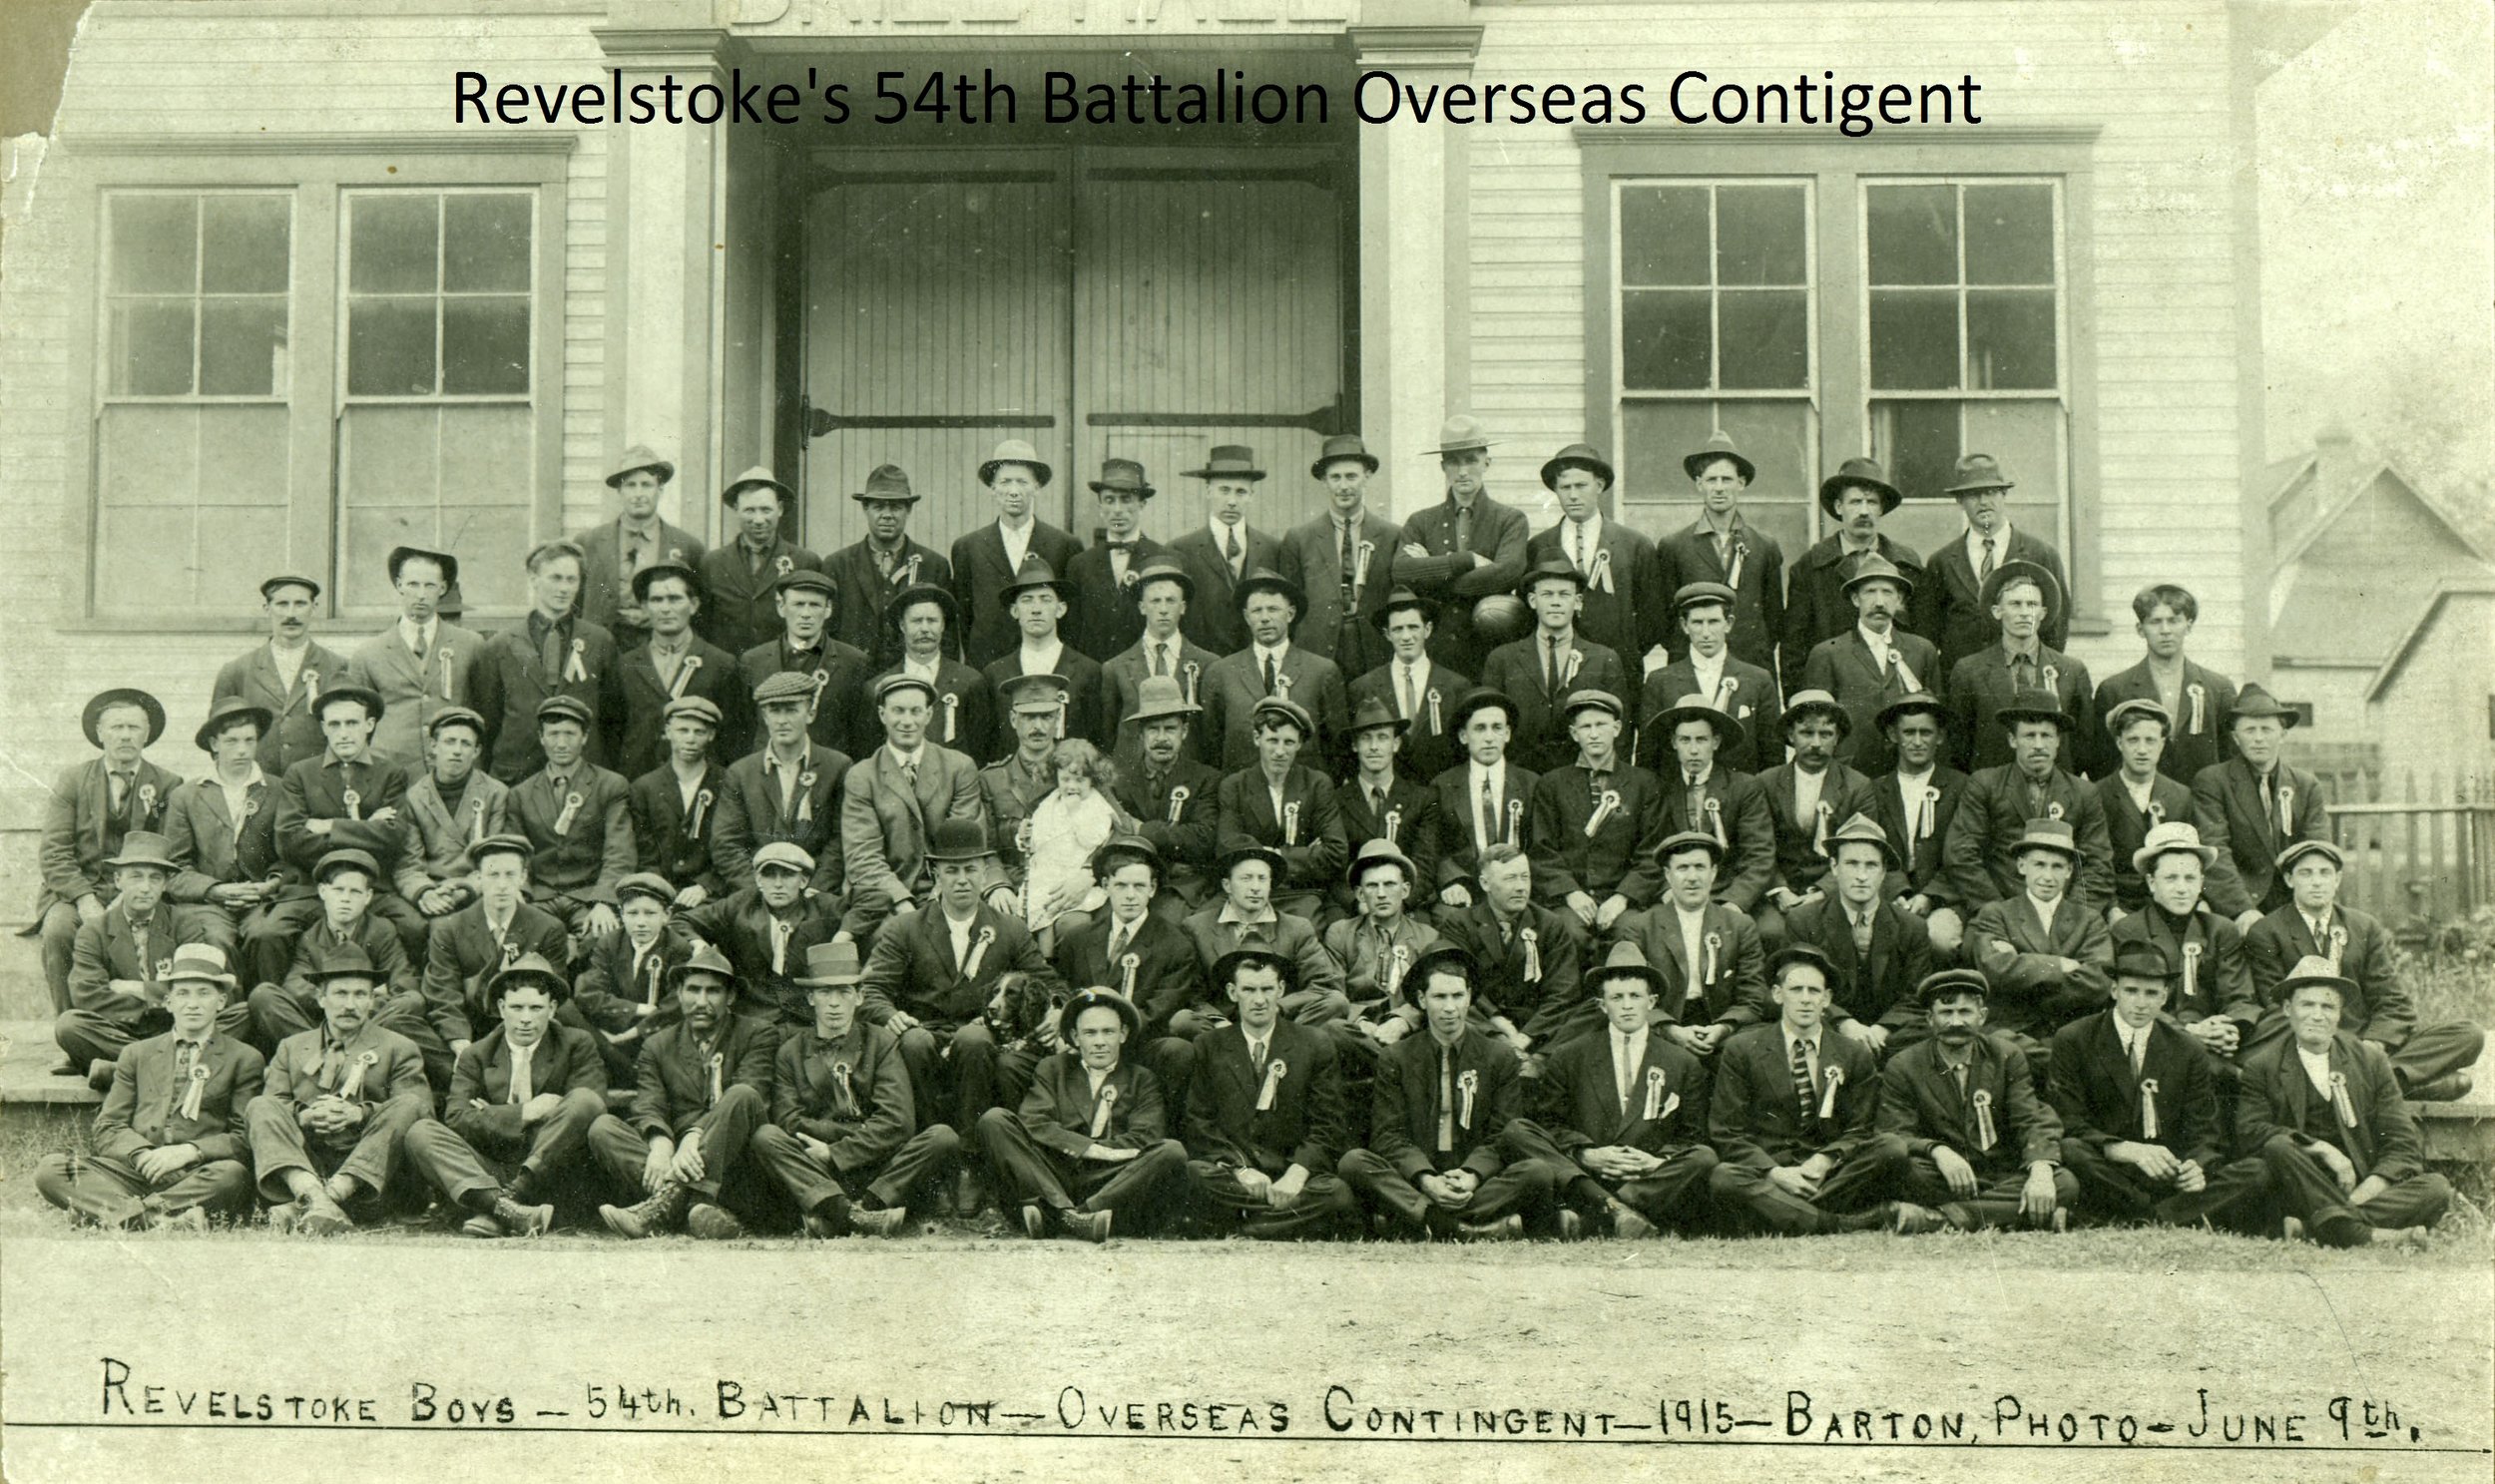 3719 Revelstoke Boy's 54th Battalion - Overseas Contigent.jpg